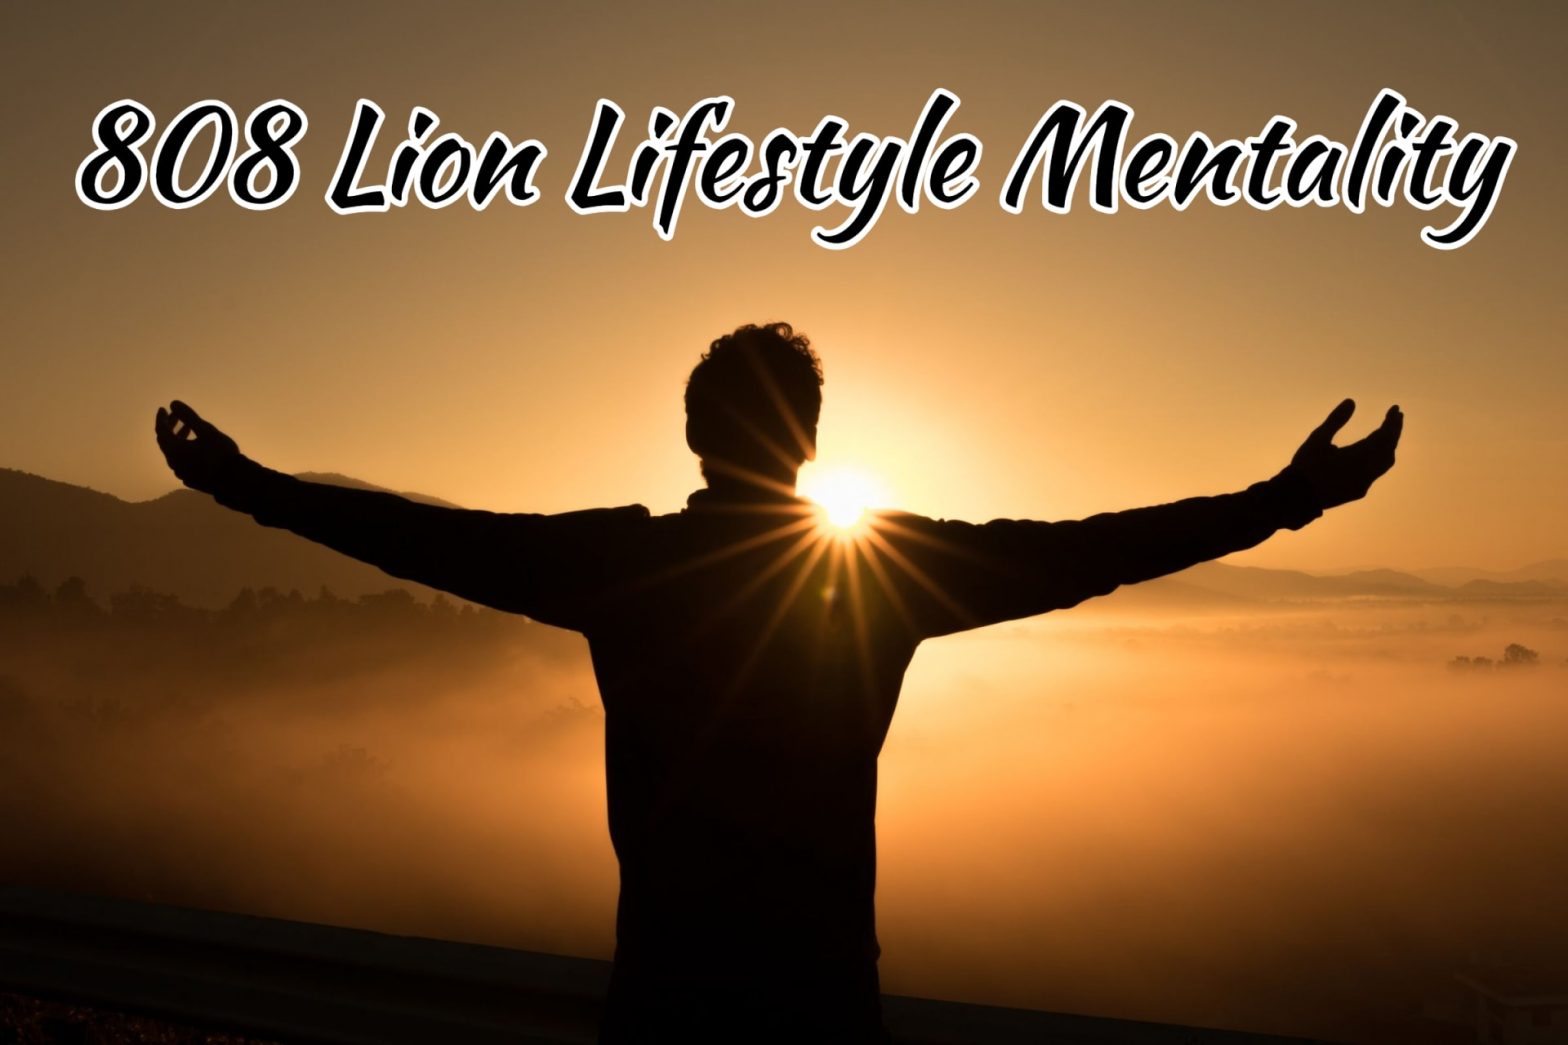 808 Lion Lifestyle Mentality